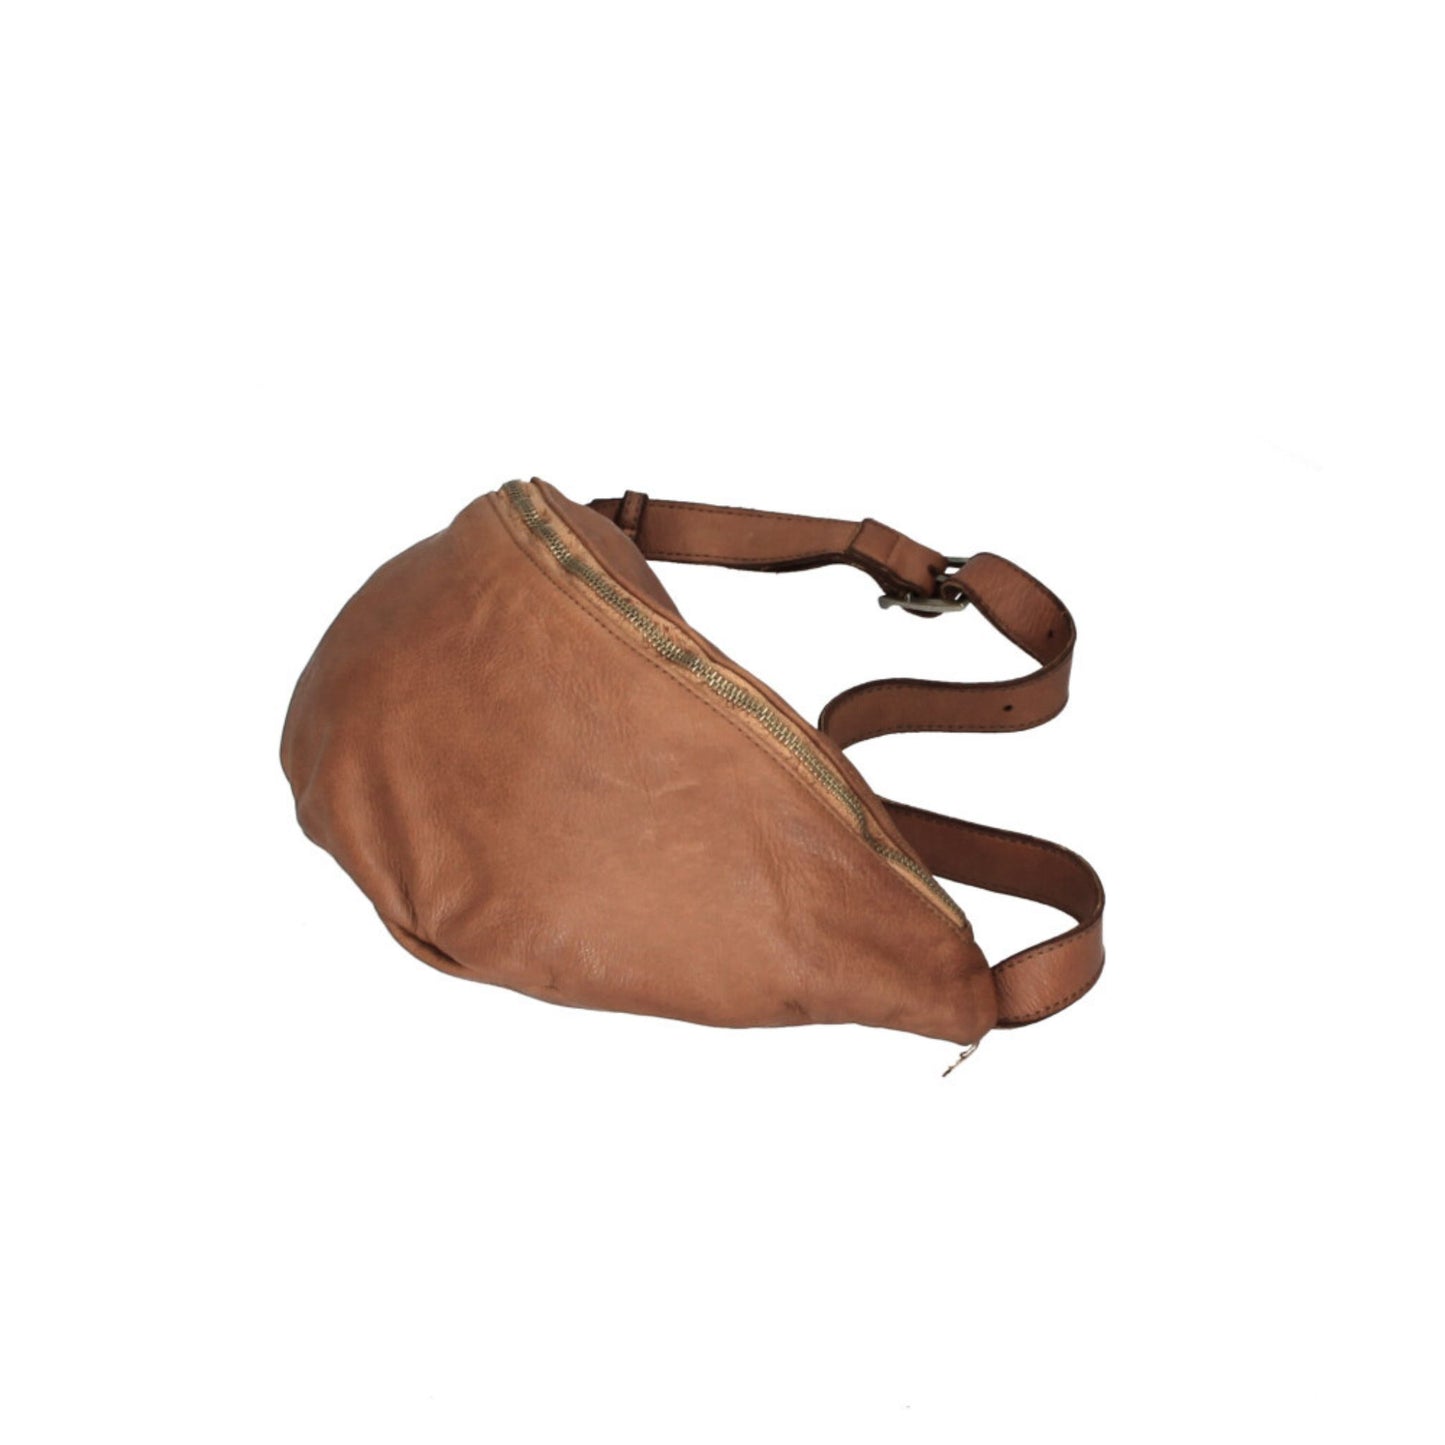 The Large Washed Leather BumBag / Sling Bag